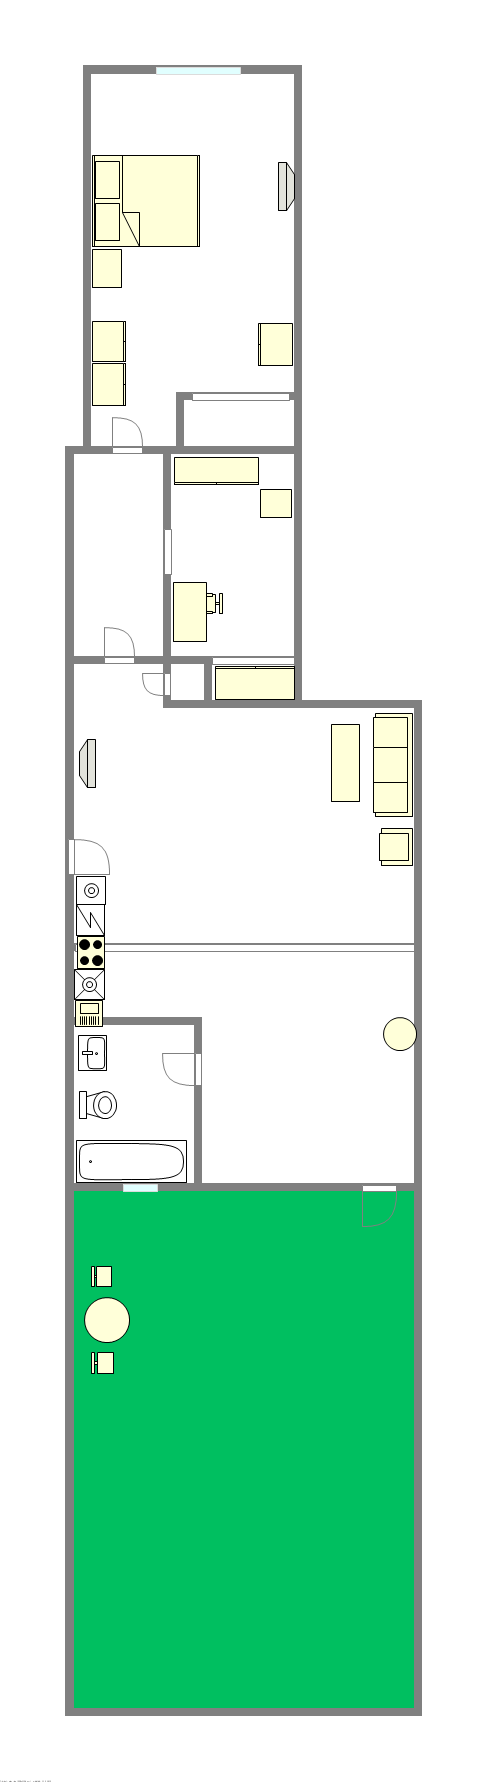 公寓 Park Slope - 平面图